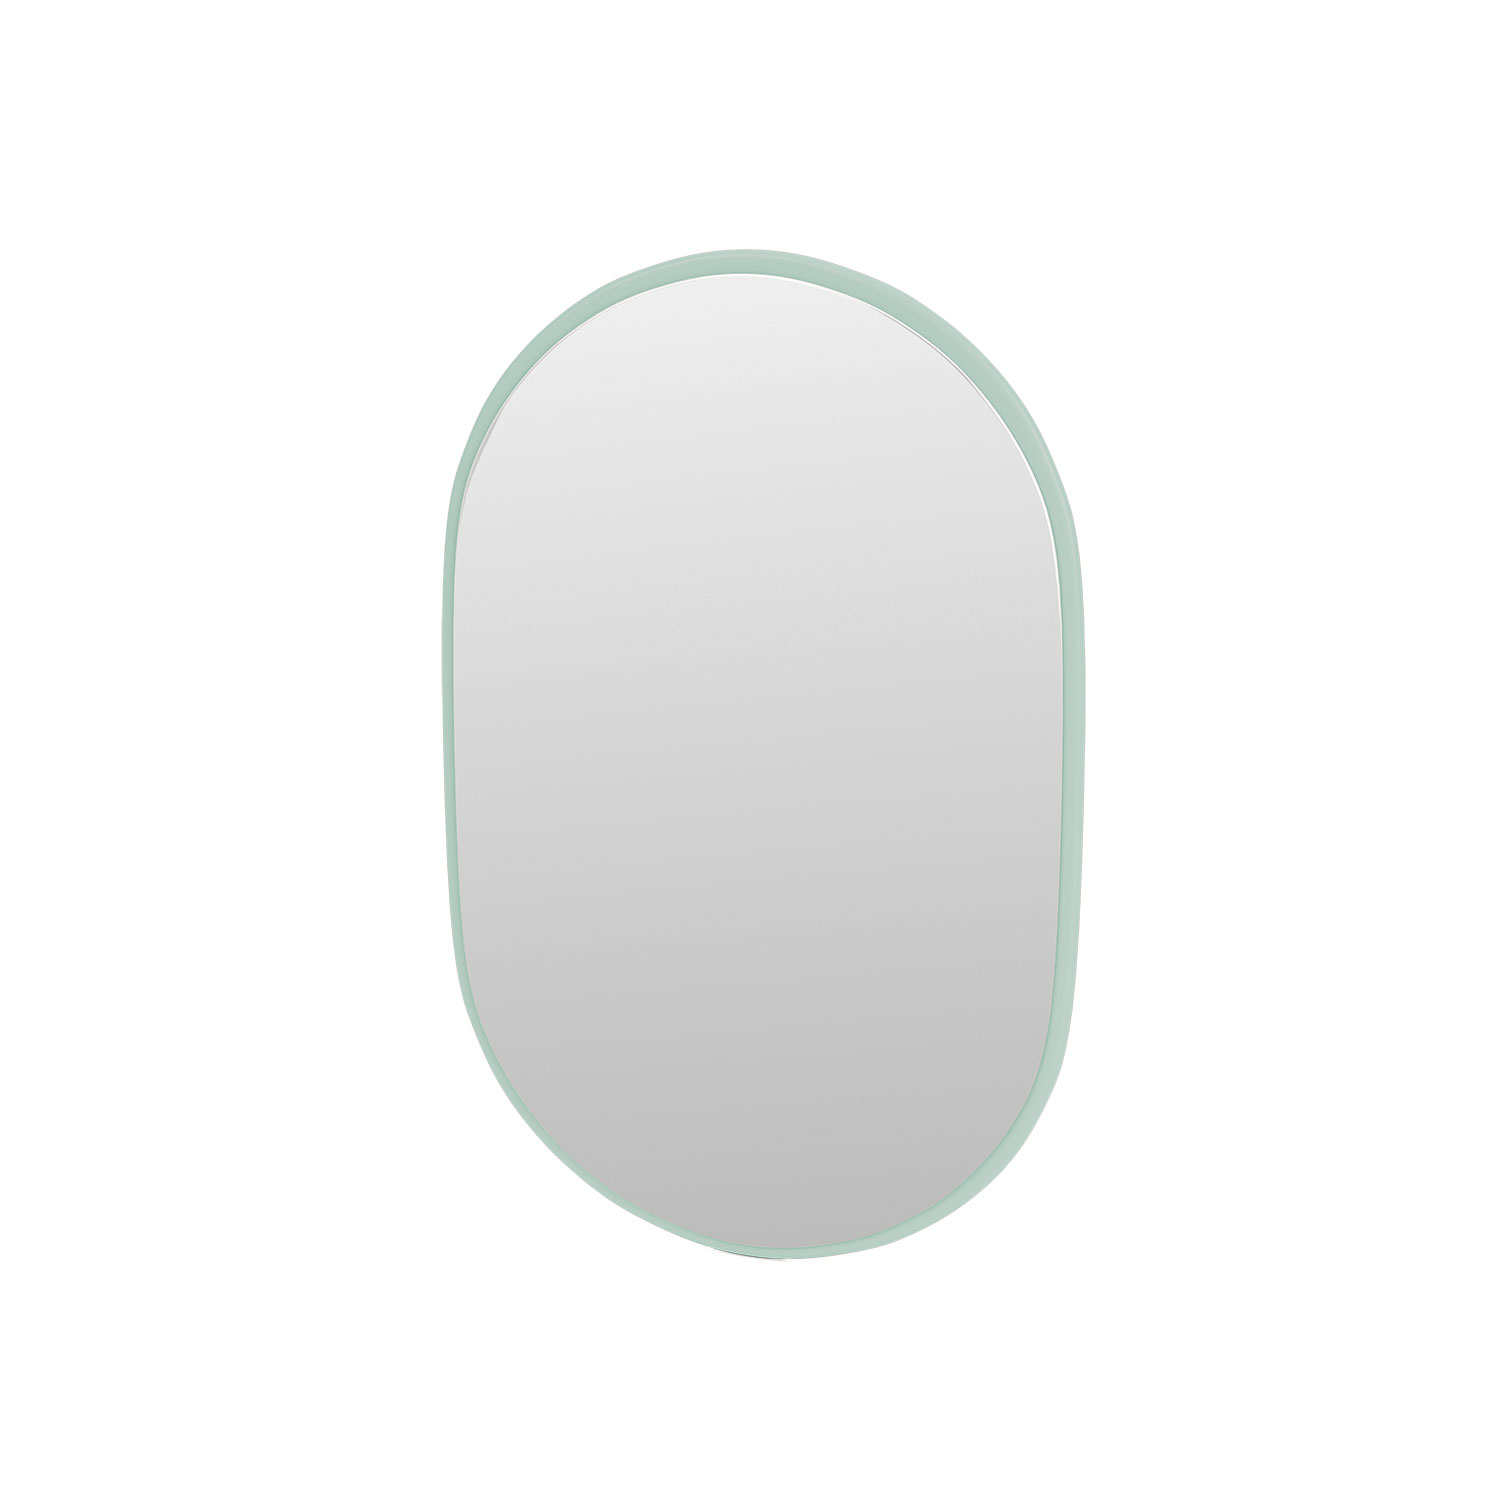 LOOK oval mirror, Caribe